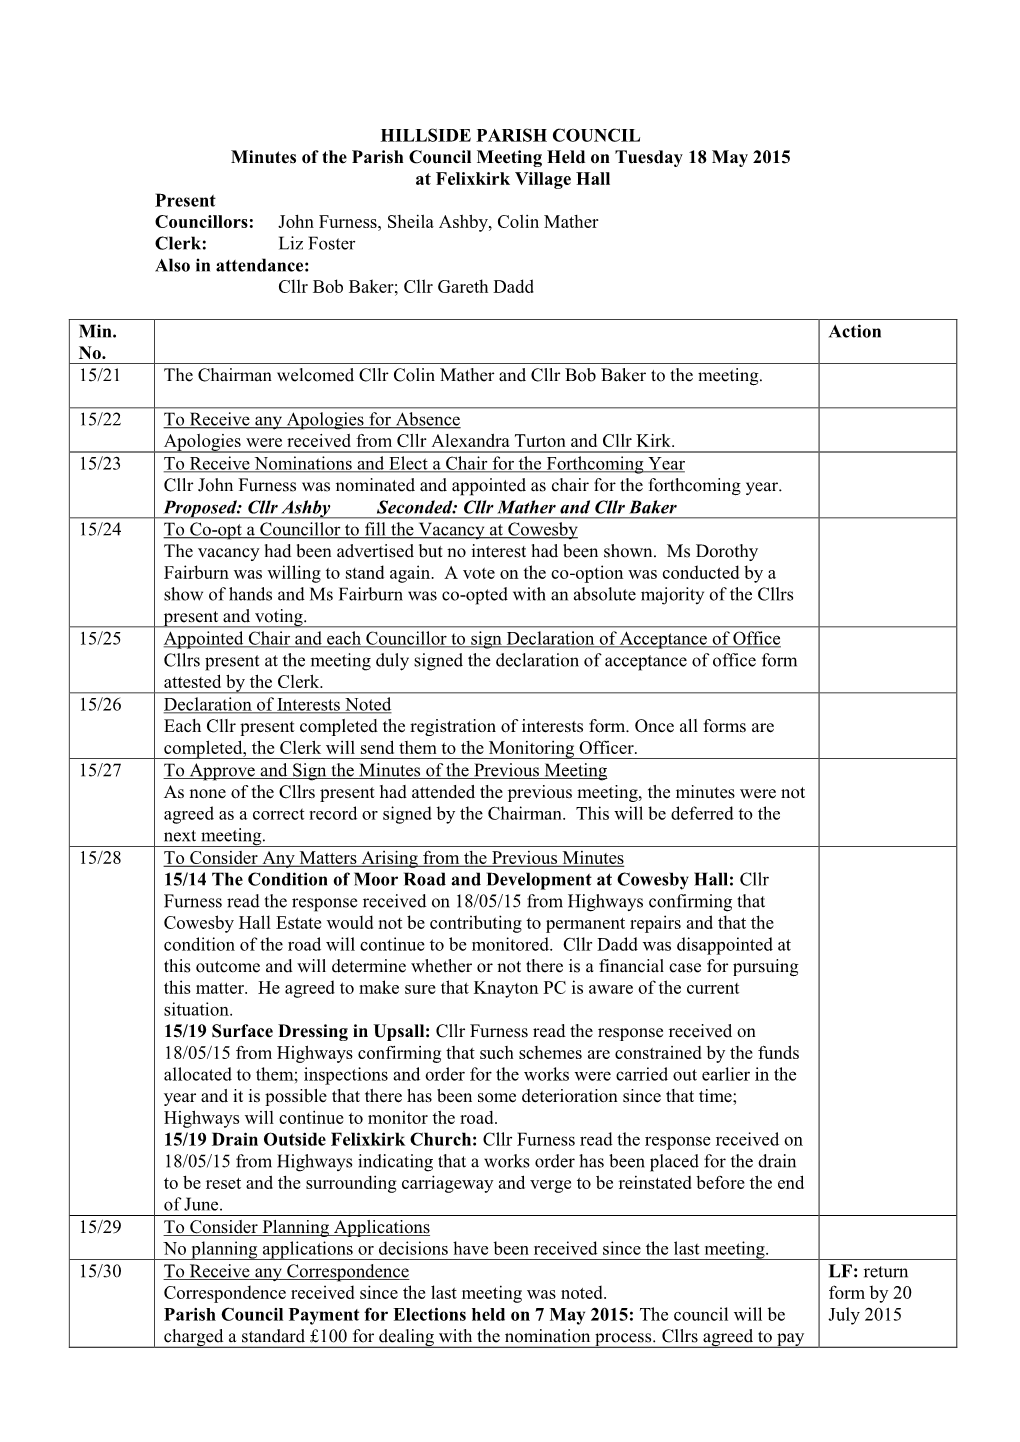 HILLSIDE PARISH COUNCIL Minutes 18 May 2015